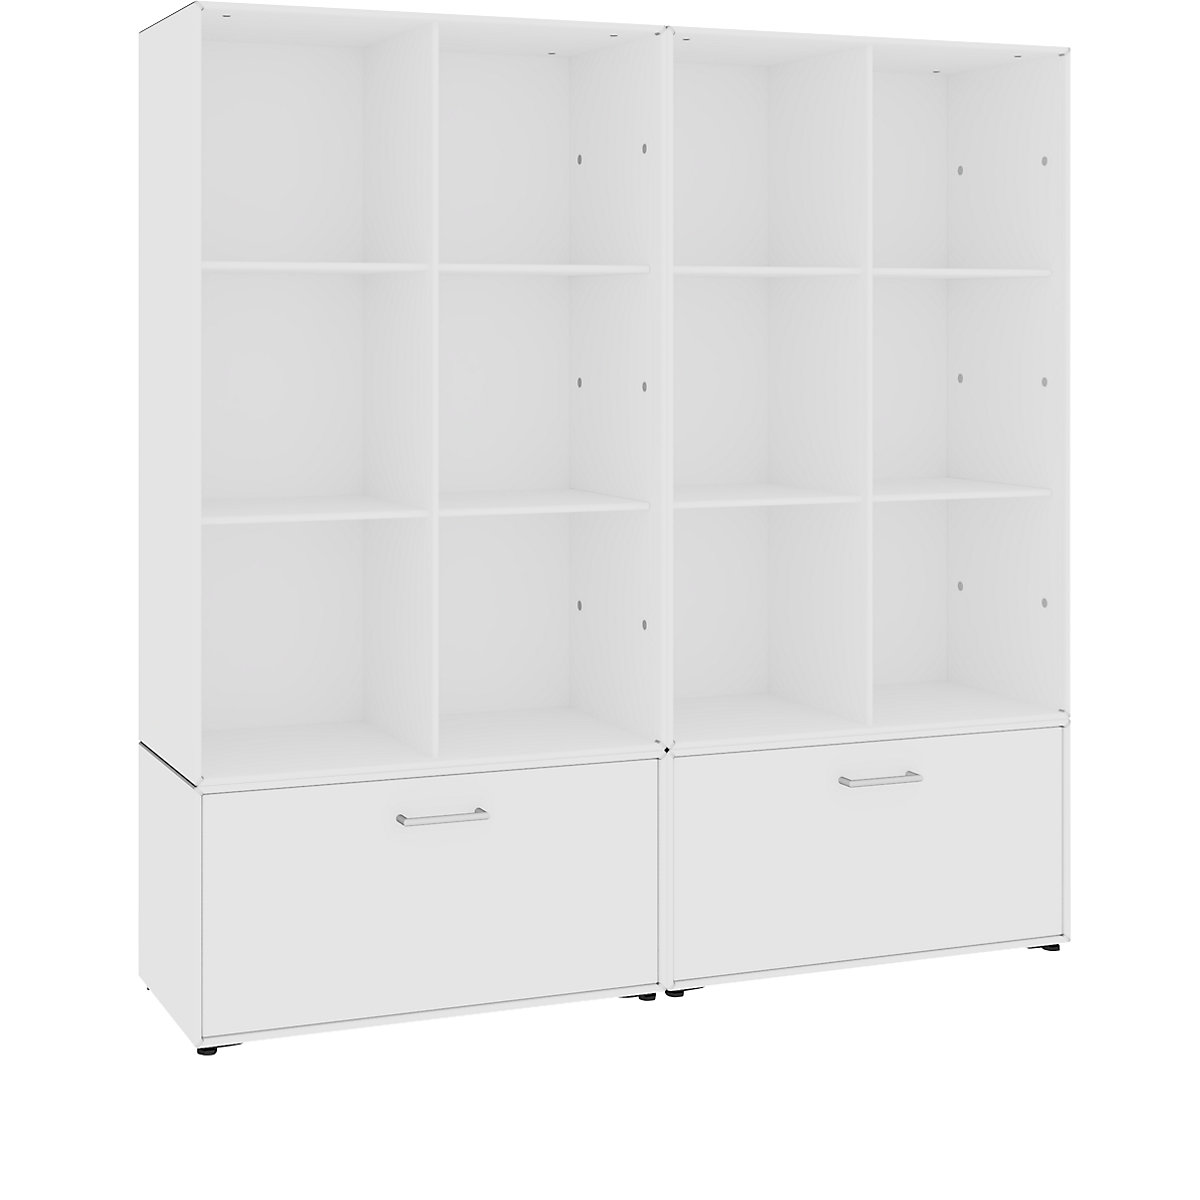 Combination shelf/drawer unit - mauser